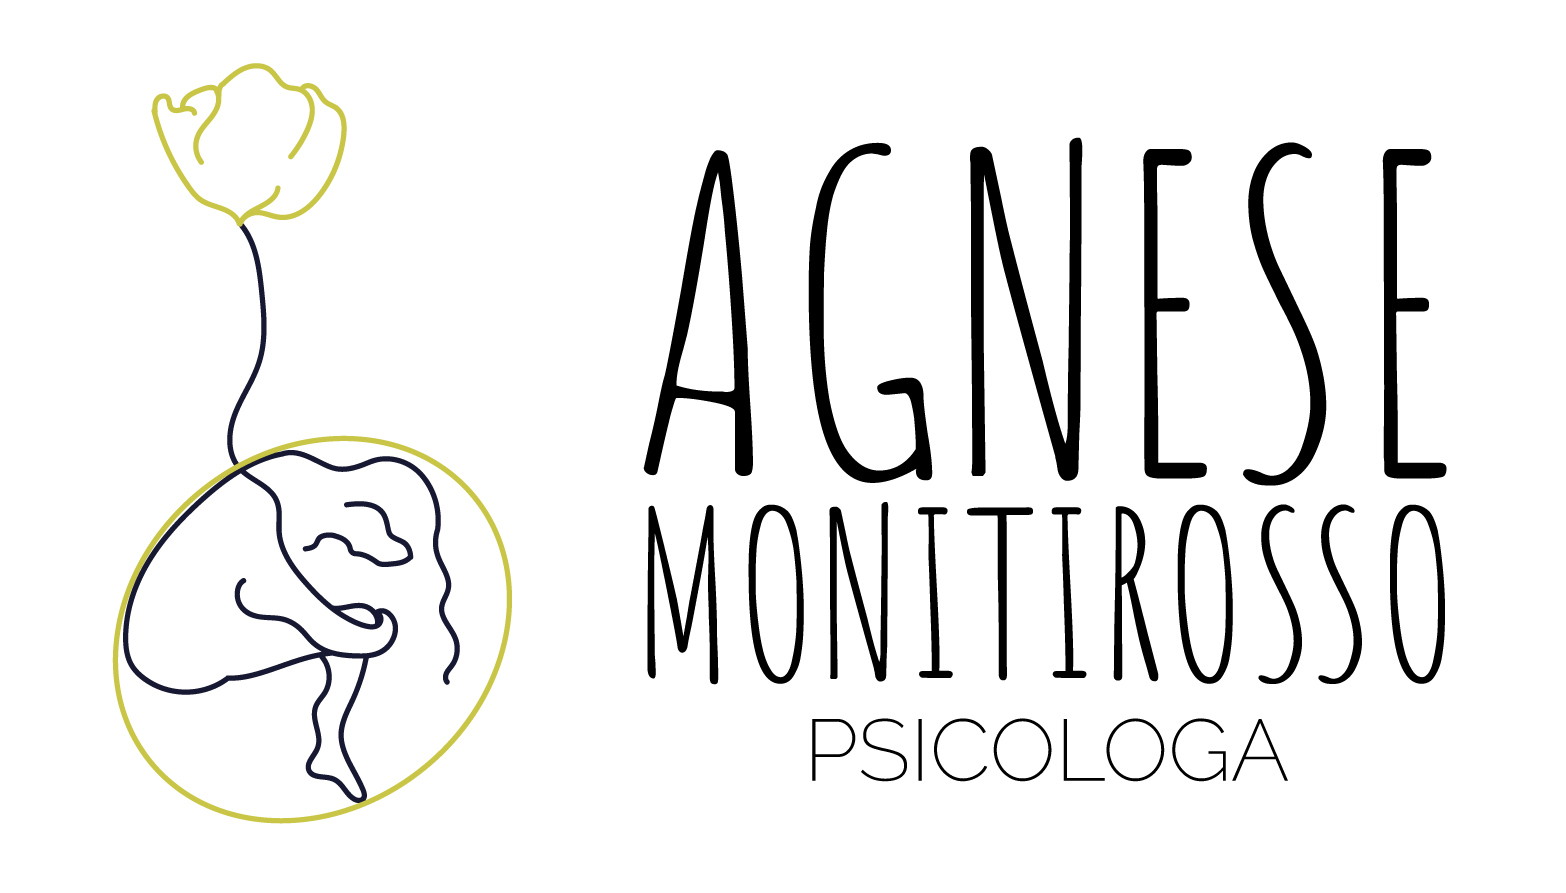 Agnese Montirosso Psicologa